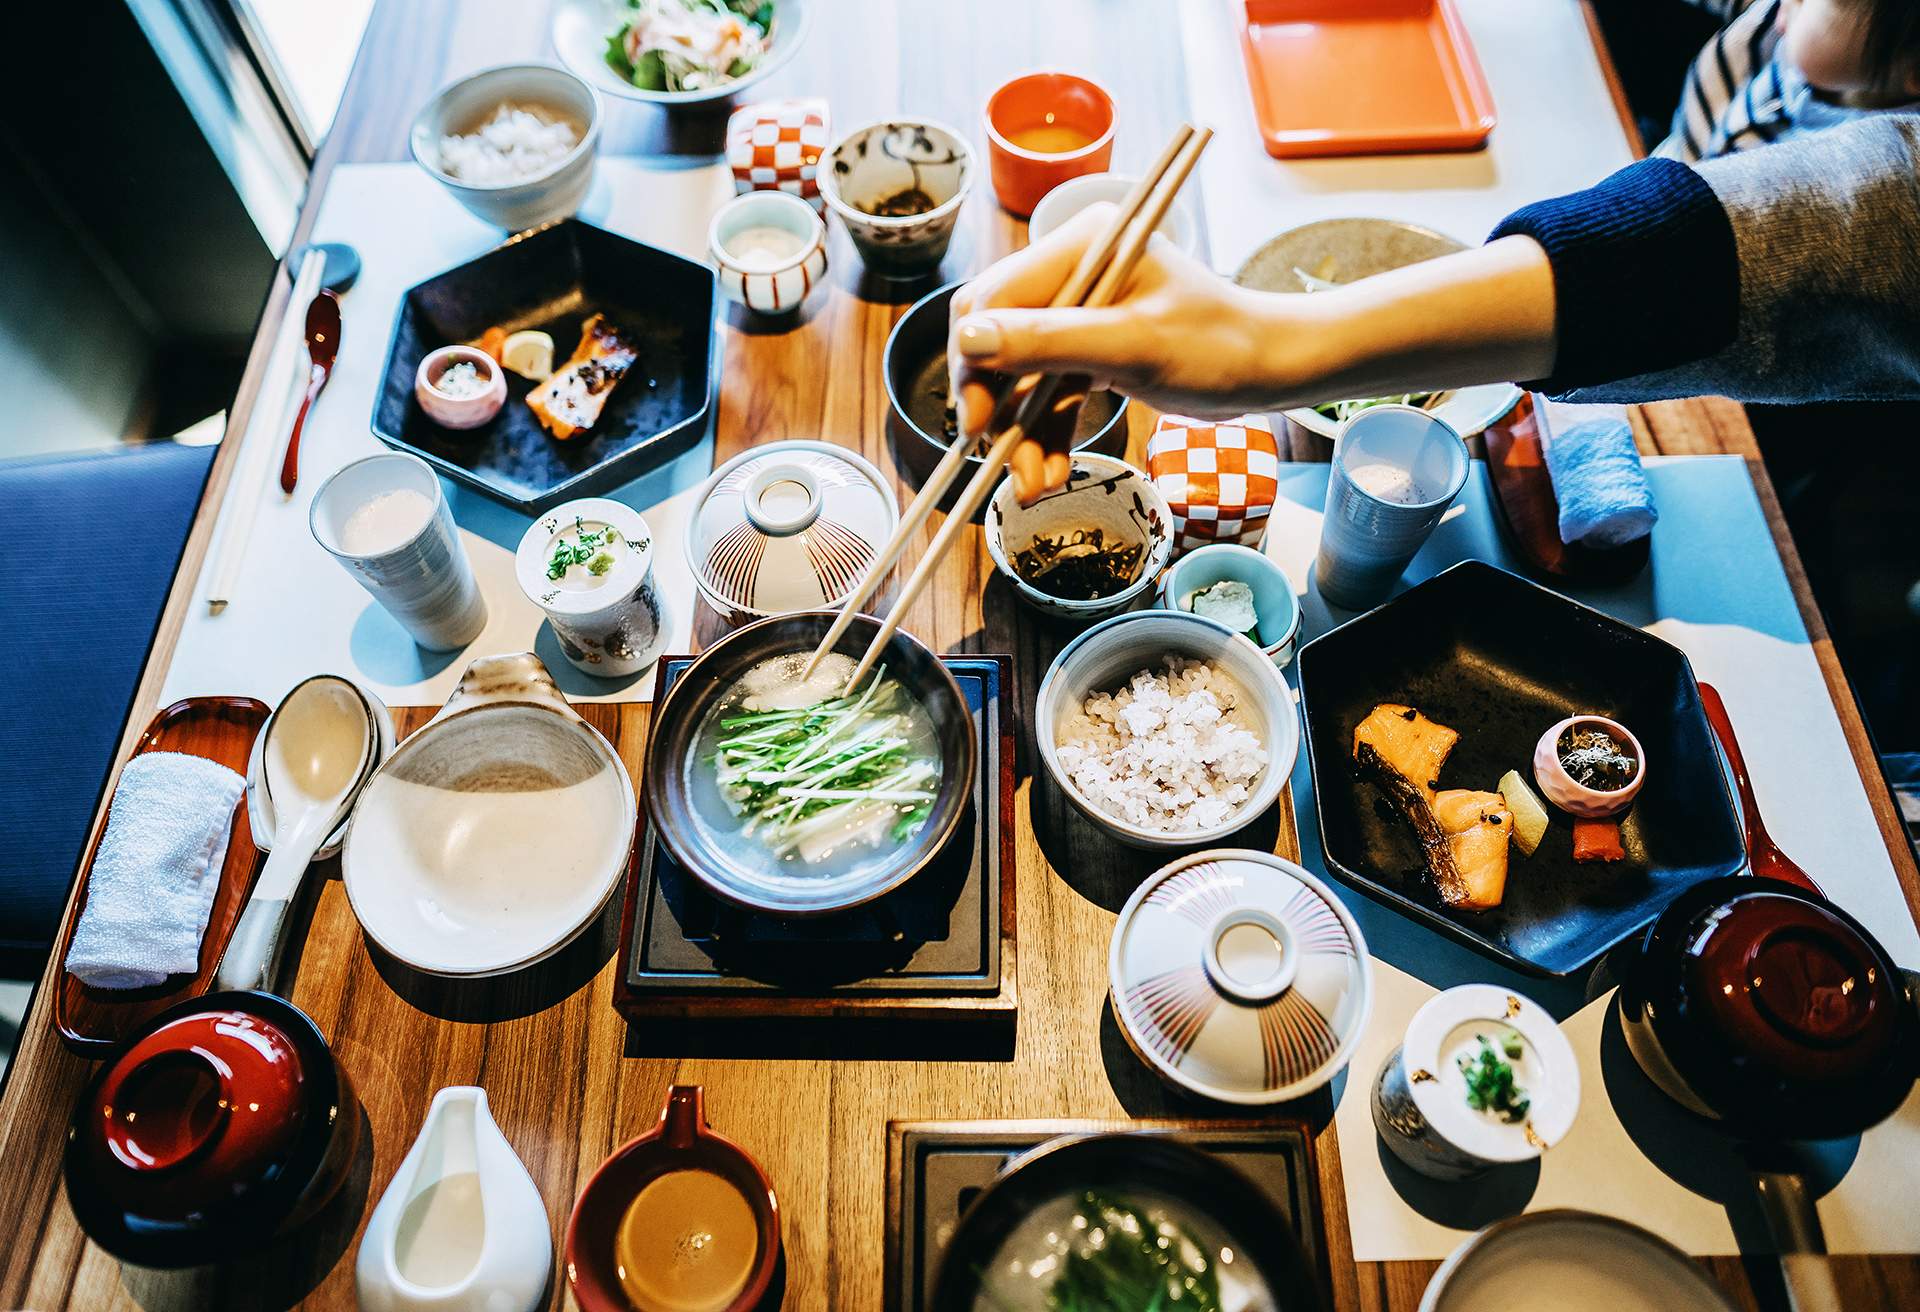 japanese food culture essay